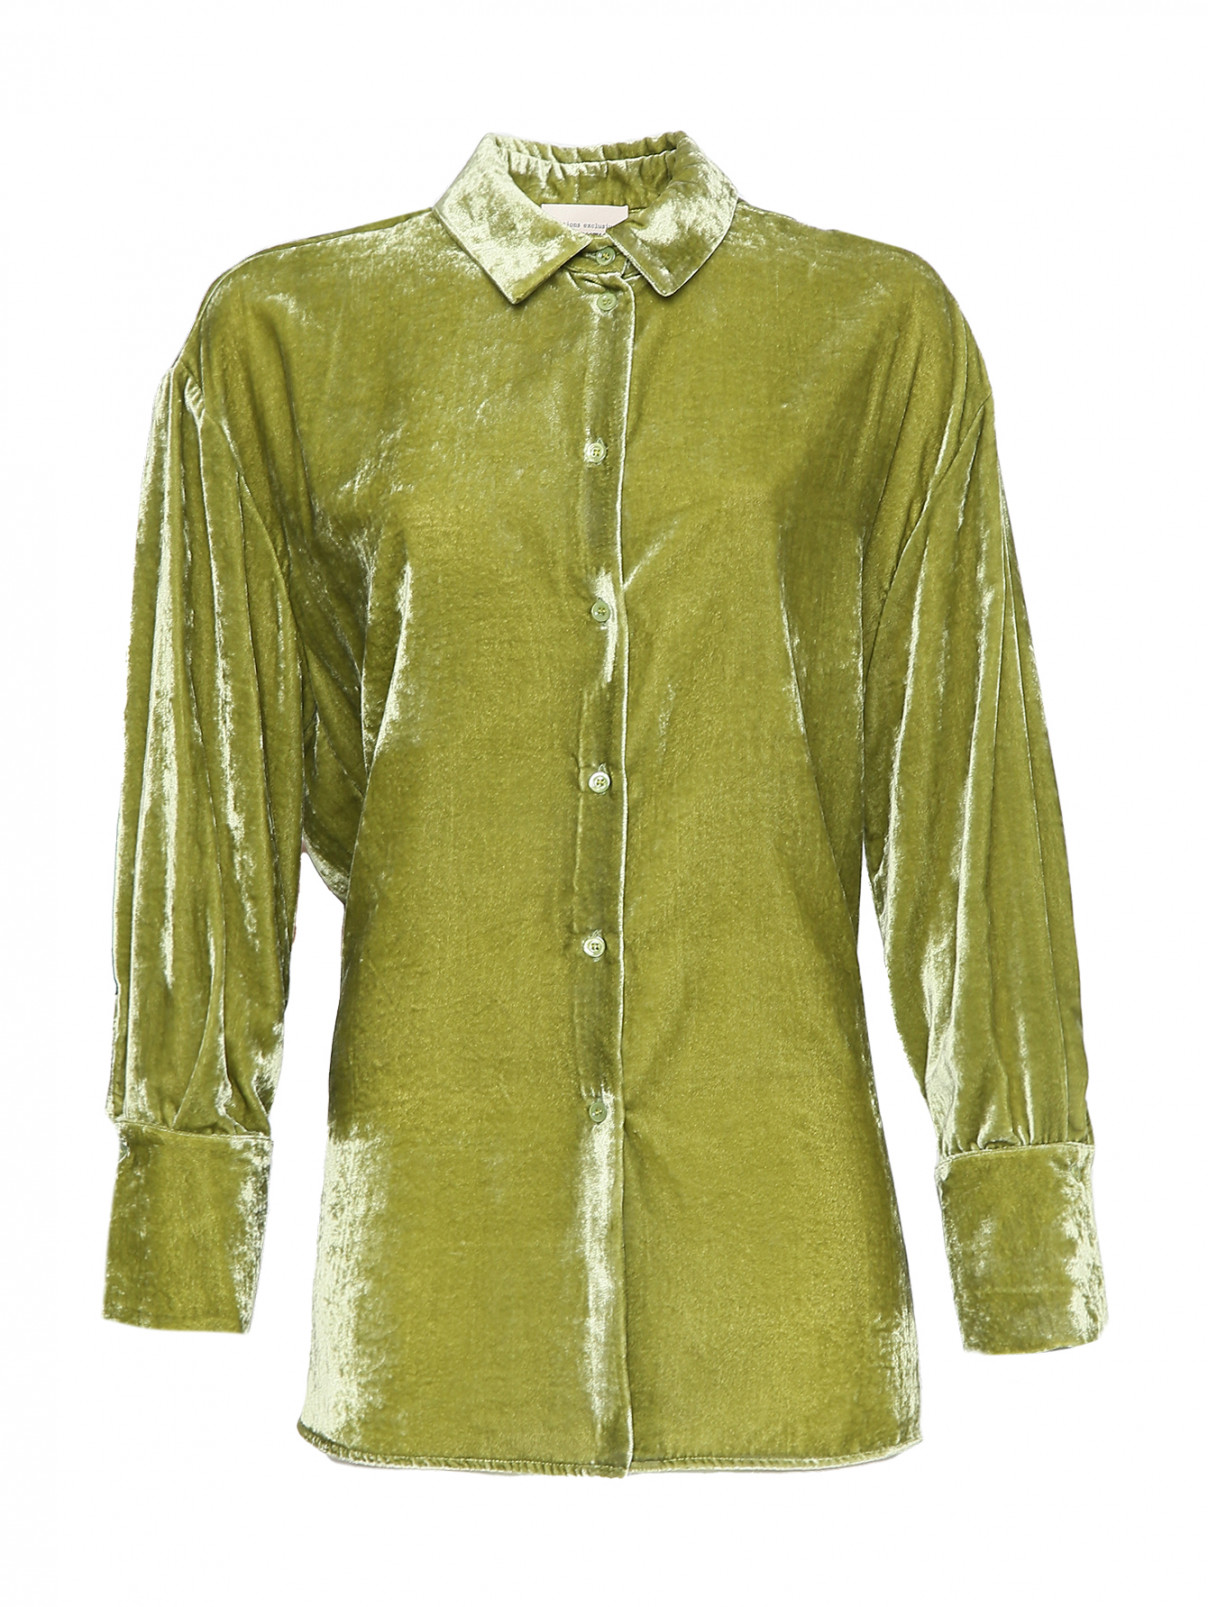 Рубашка из жатого бархата Semicouture  –  Общий вид  – Цвет:  Зеленый